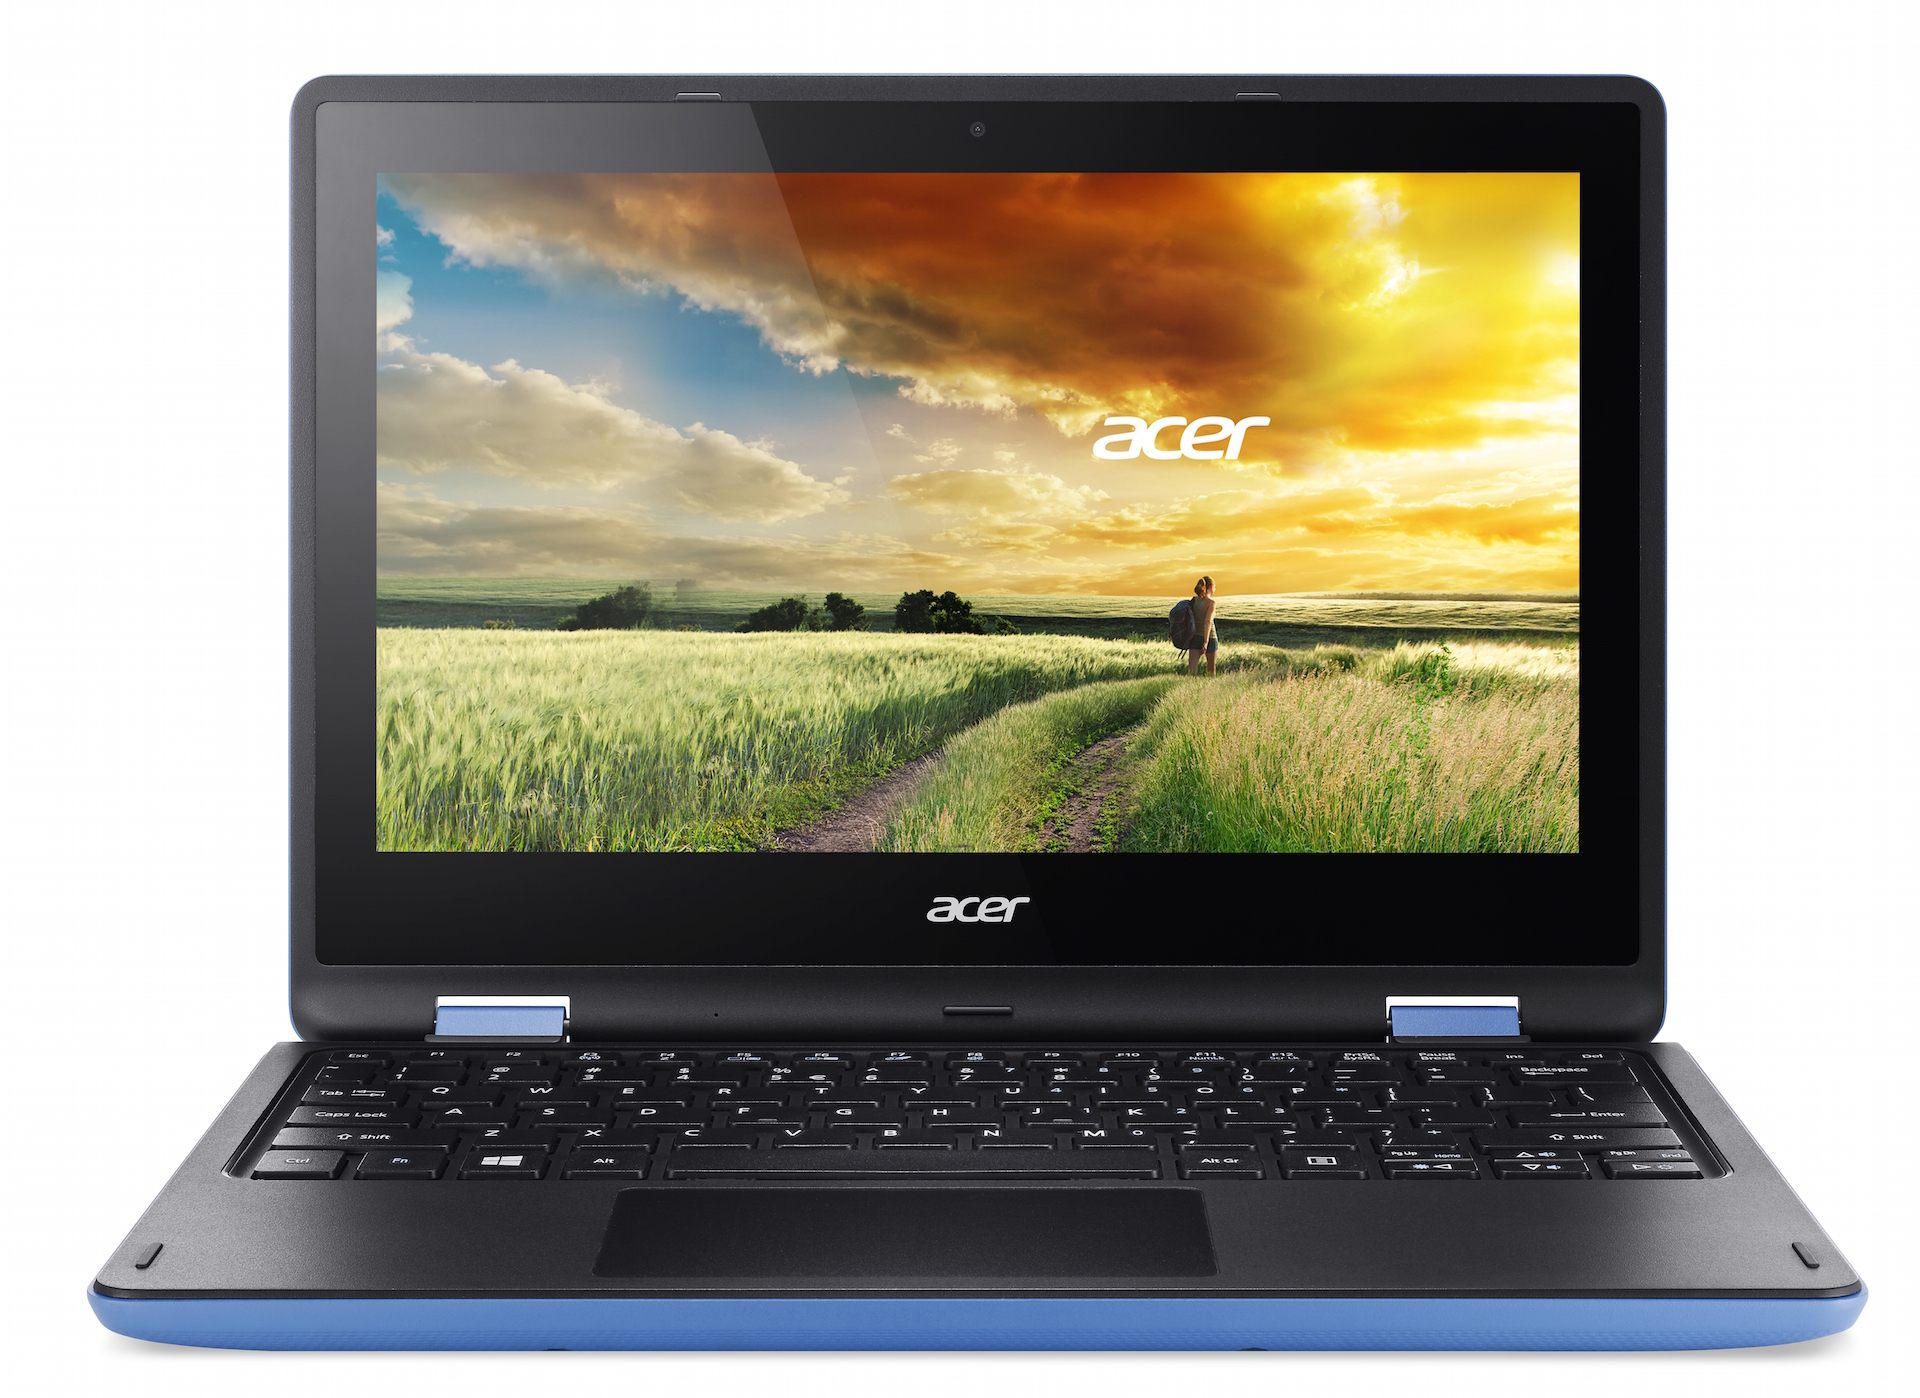 Ноутбуки асер отзывы. Ноутбук Acer Aspire r3-131t-c81r (NX. G11er.006). Acer Aspire r3-131t-c81r (NX. G11er.006). Acer Aspire r3-131t-c81r. Ноутбук Aspire r3-131t-c81r (NX.g11er.006).